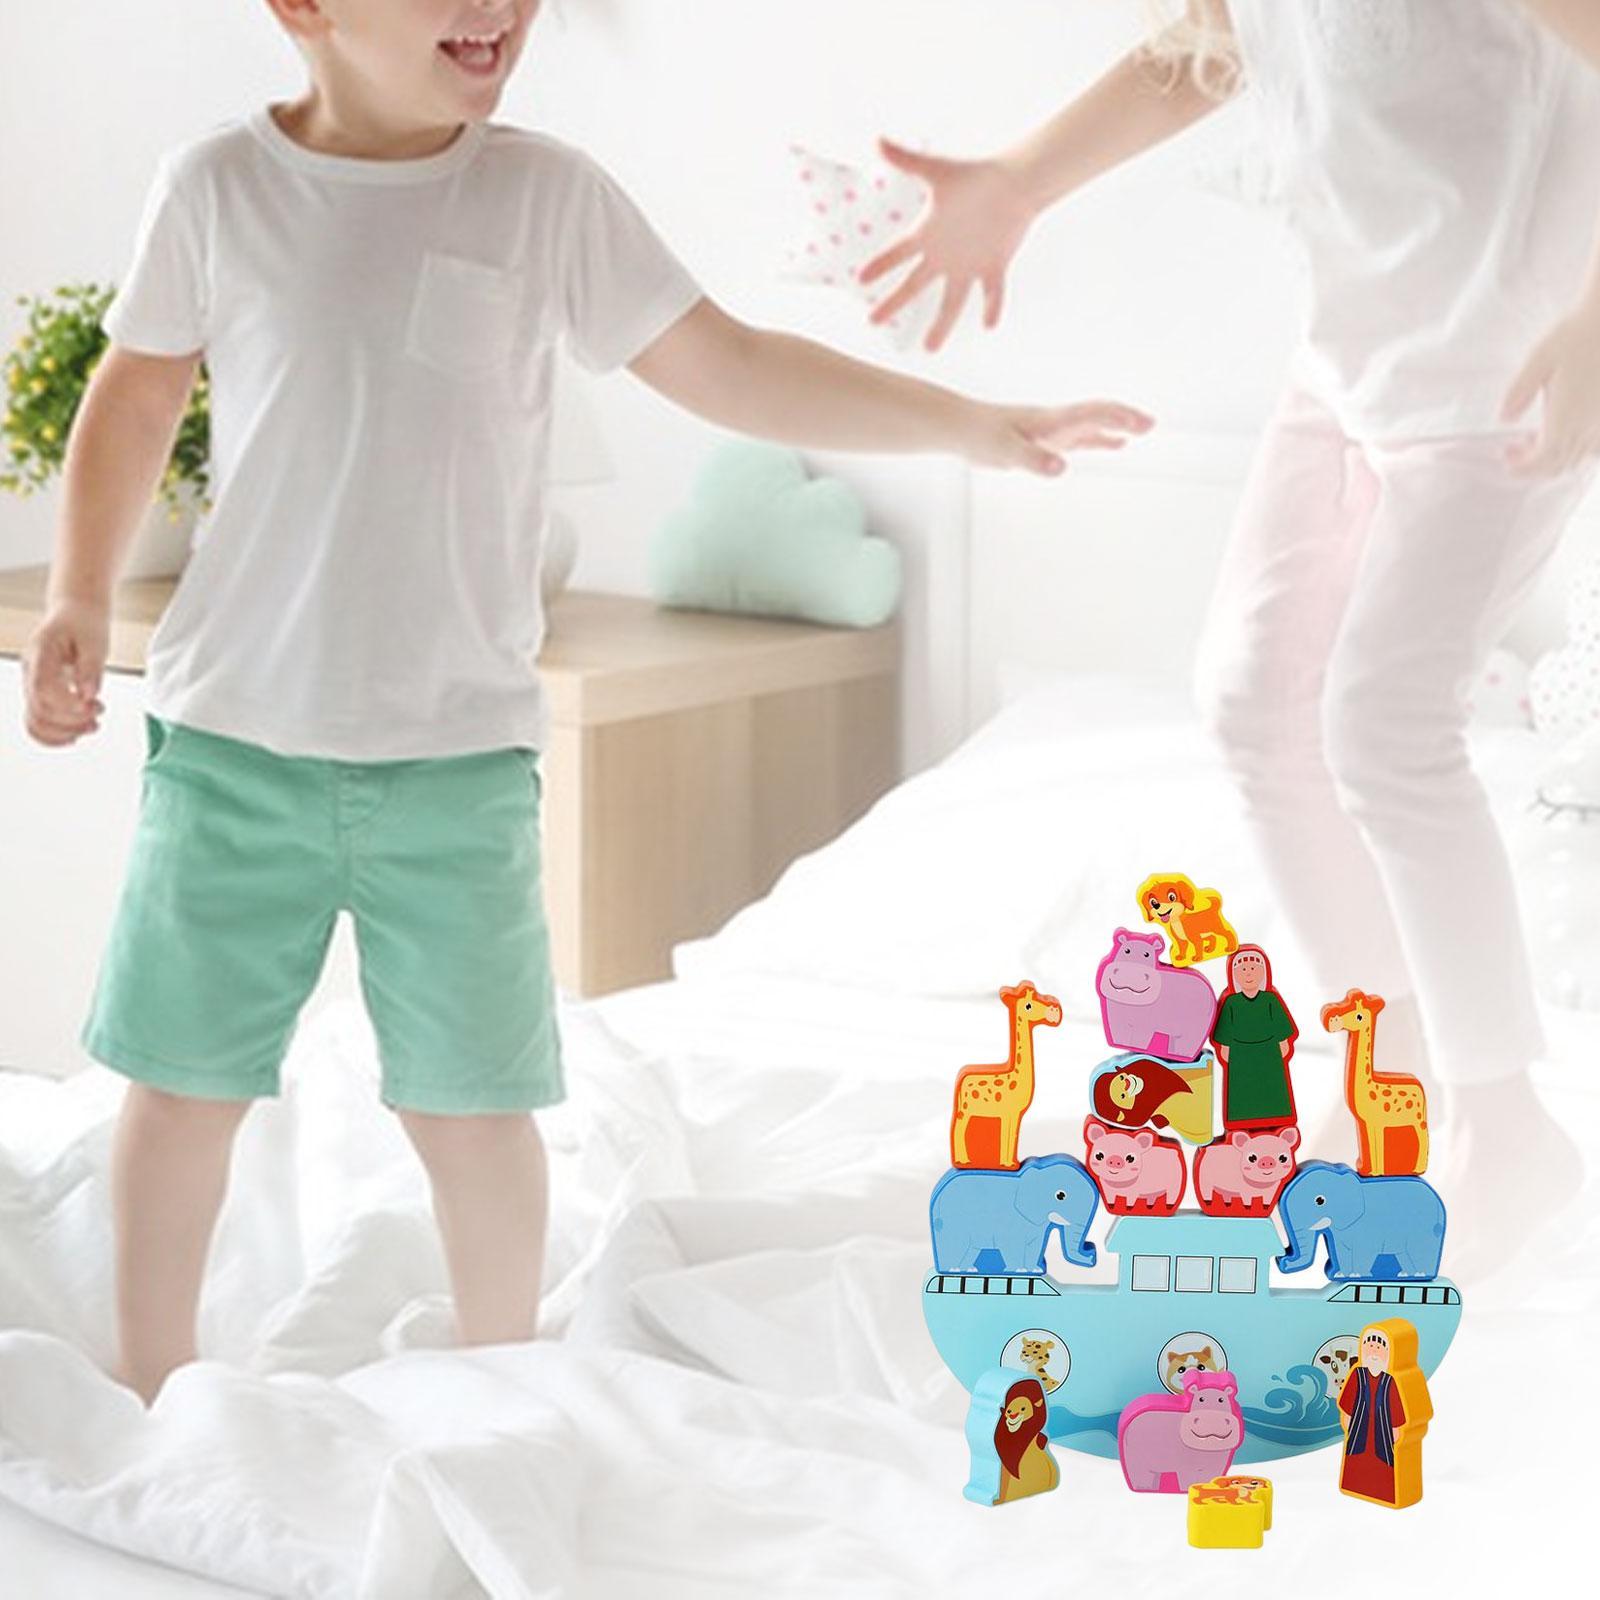 Montessori Wooden Balance Game Motor Skills Early Educational Toys Brain Development for Kids Toddler Girls Boys Children Gifts